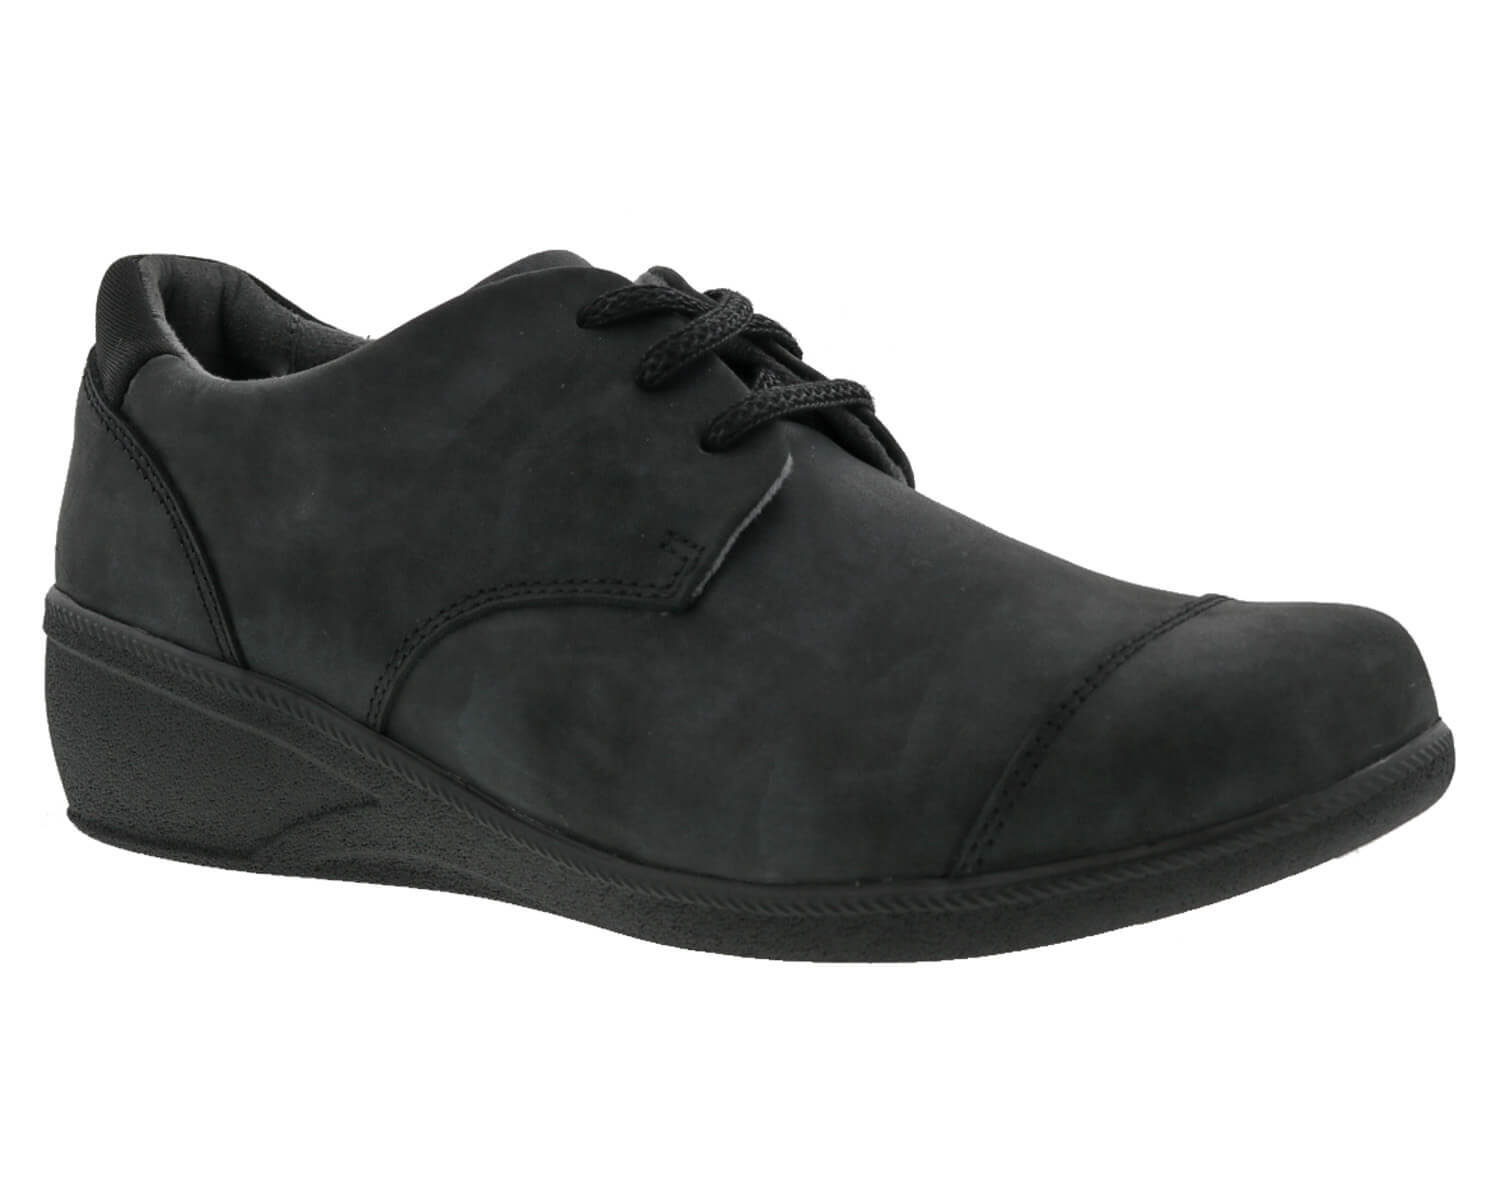 Drew Shoes Jemma 10855 - Women's Casual Shoe - Comfort Orthopedic Diabetic Shoe - Extra Depth For Orthotics - Extra Wide